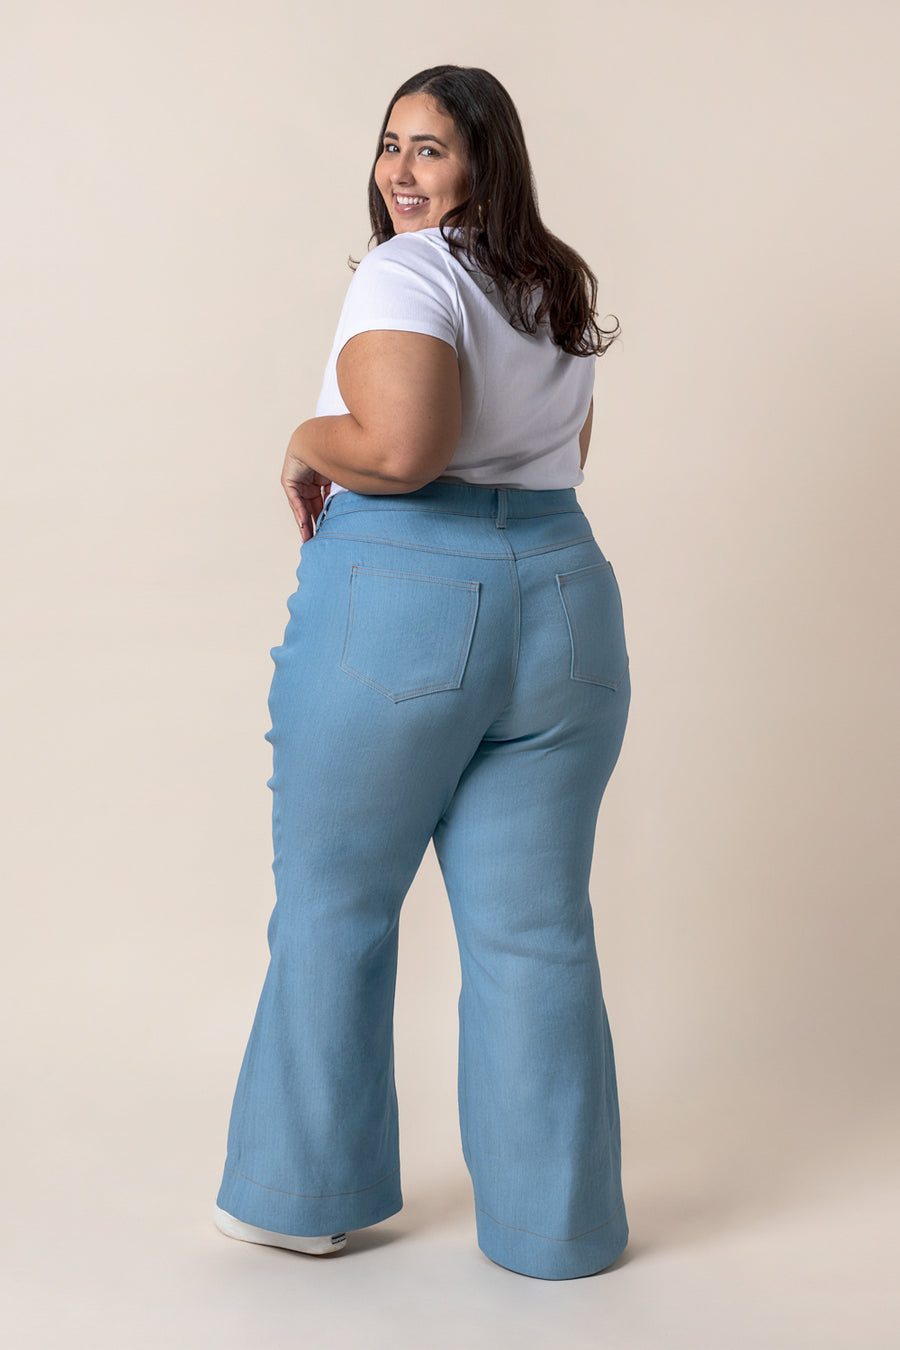 Jude Jeans | Plus Size Flare Jeans Pattern | Closet Core Patterns